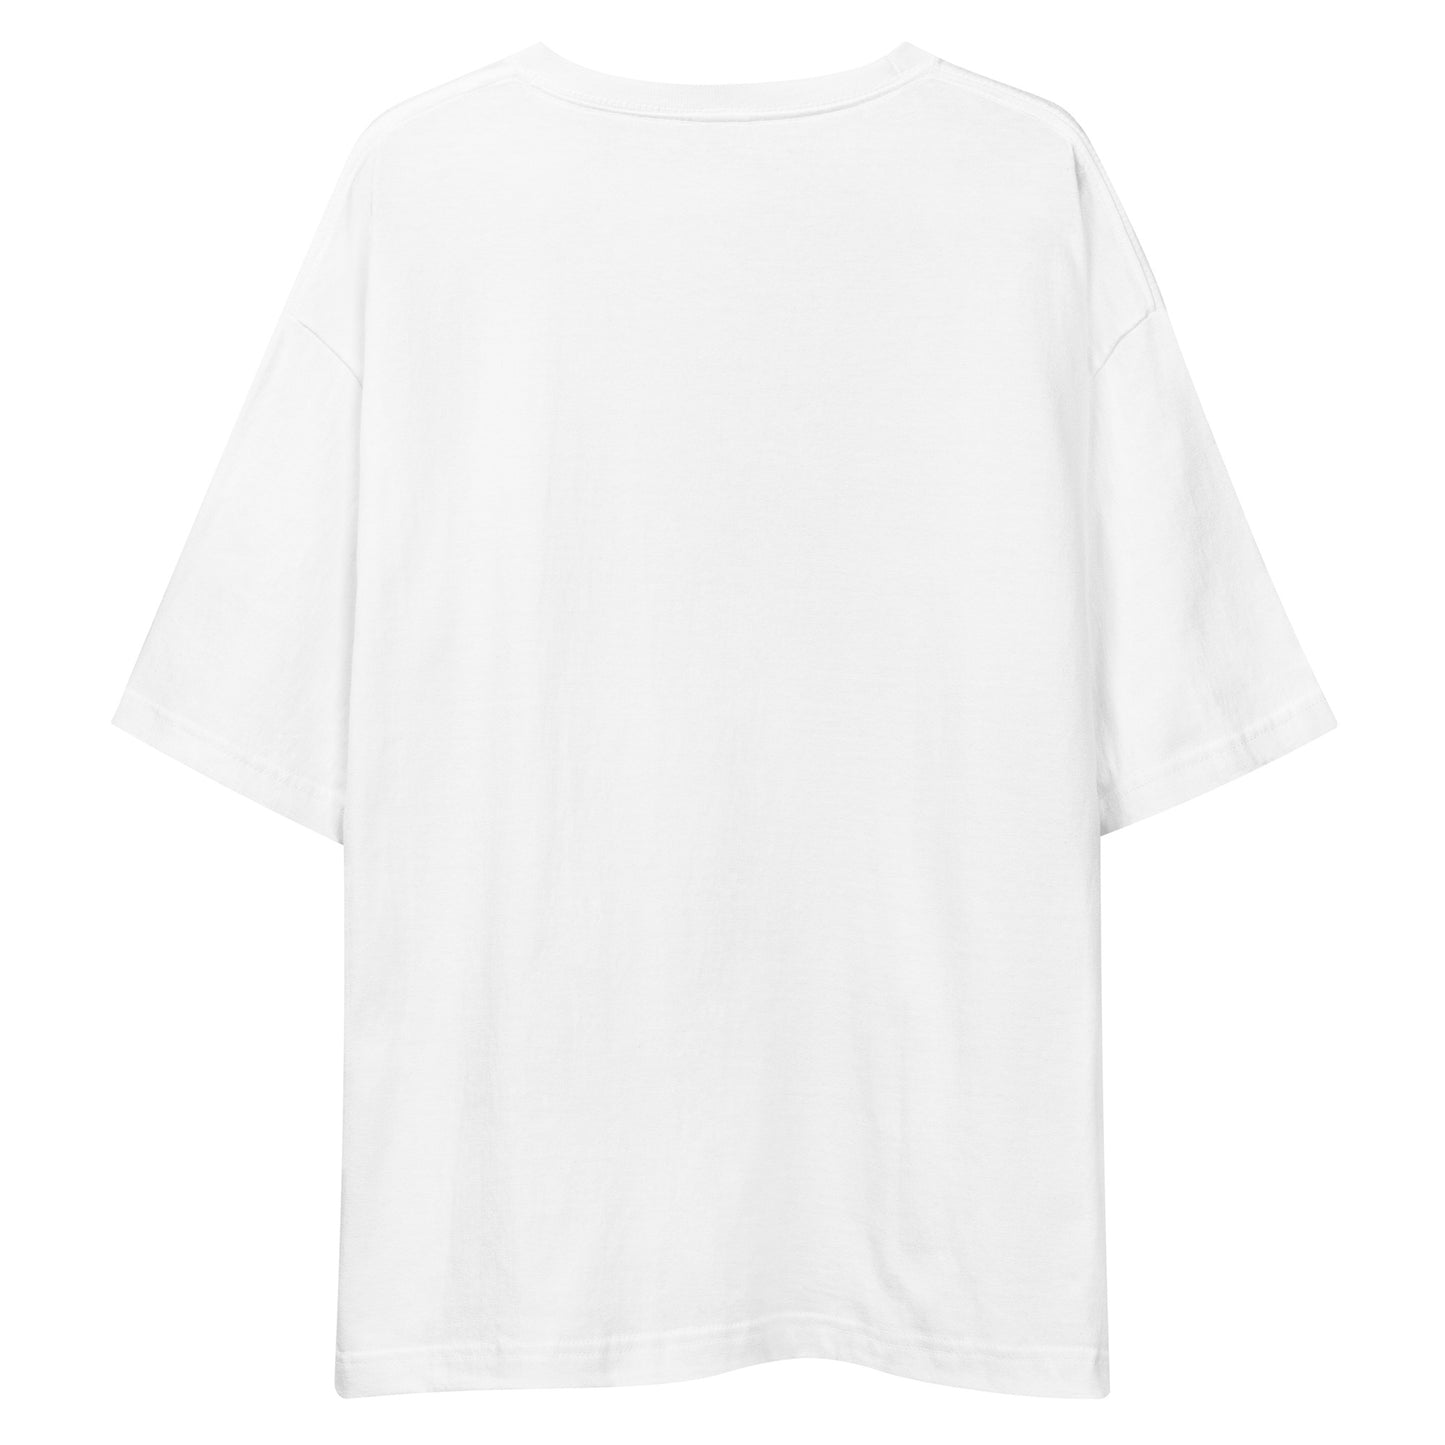 E216 - T-shirt/Oversized (Universal jump : White/Black)